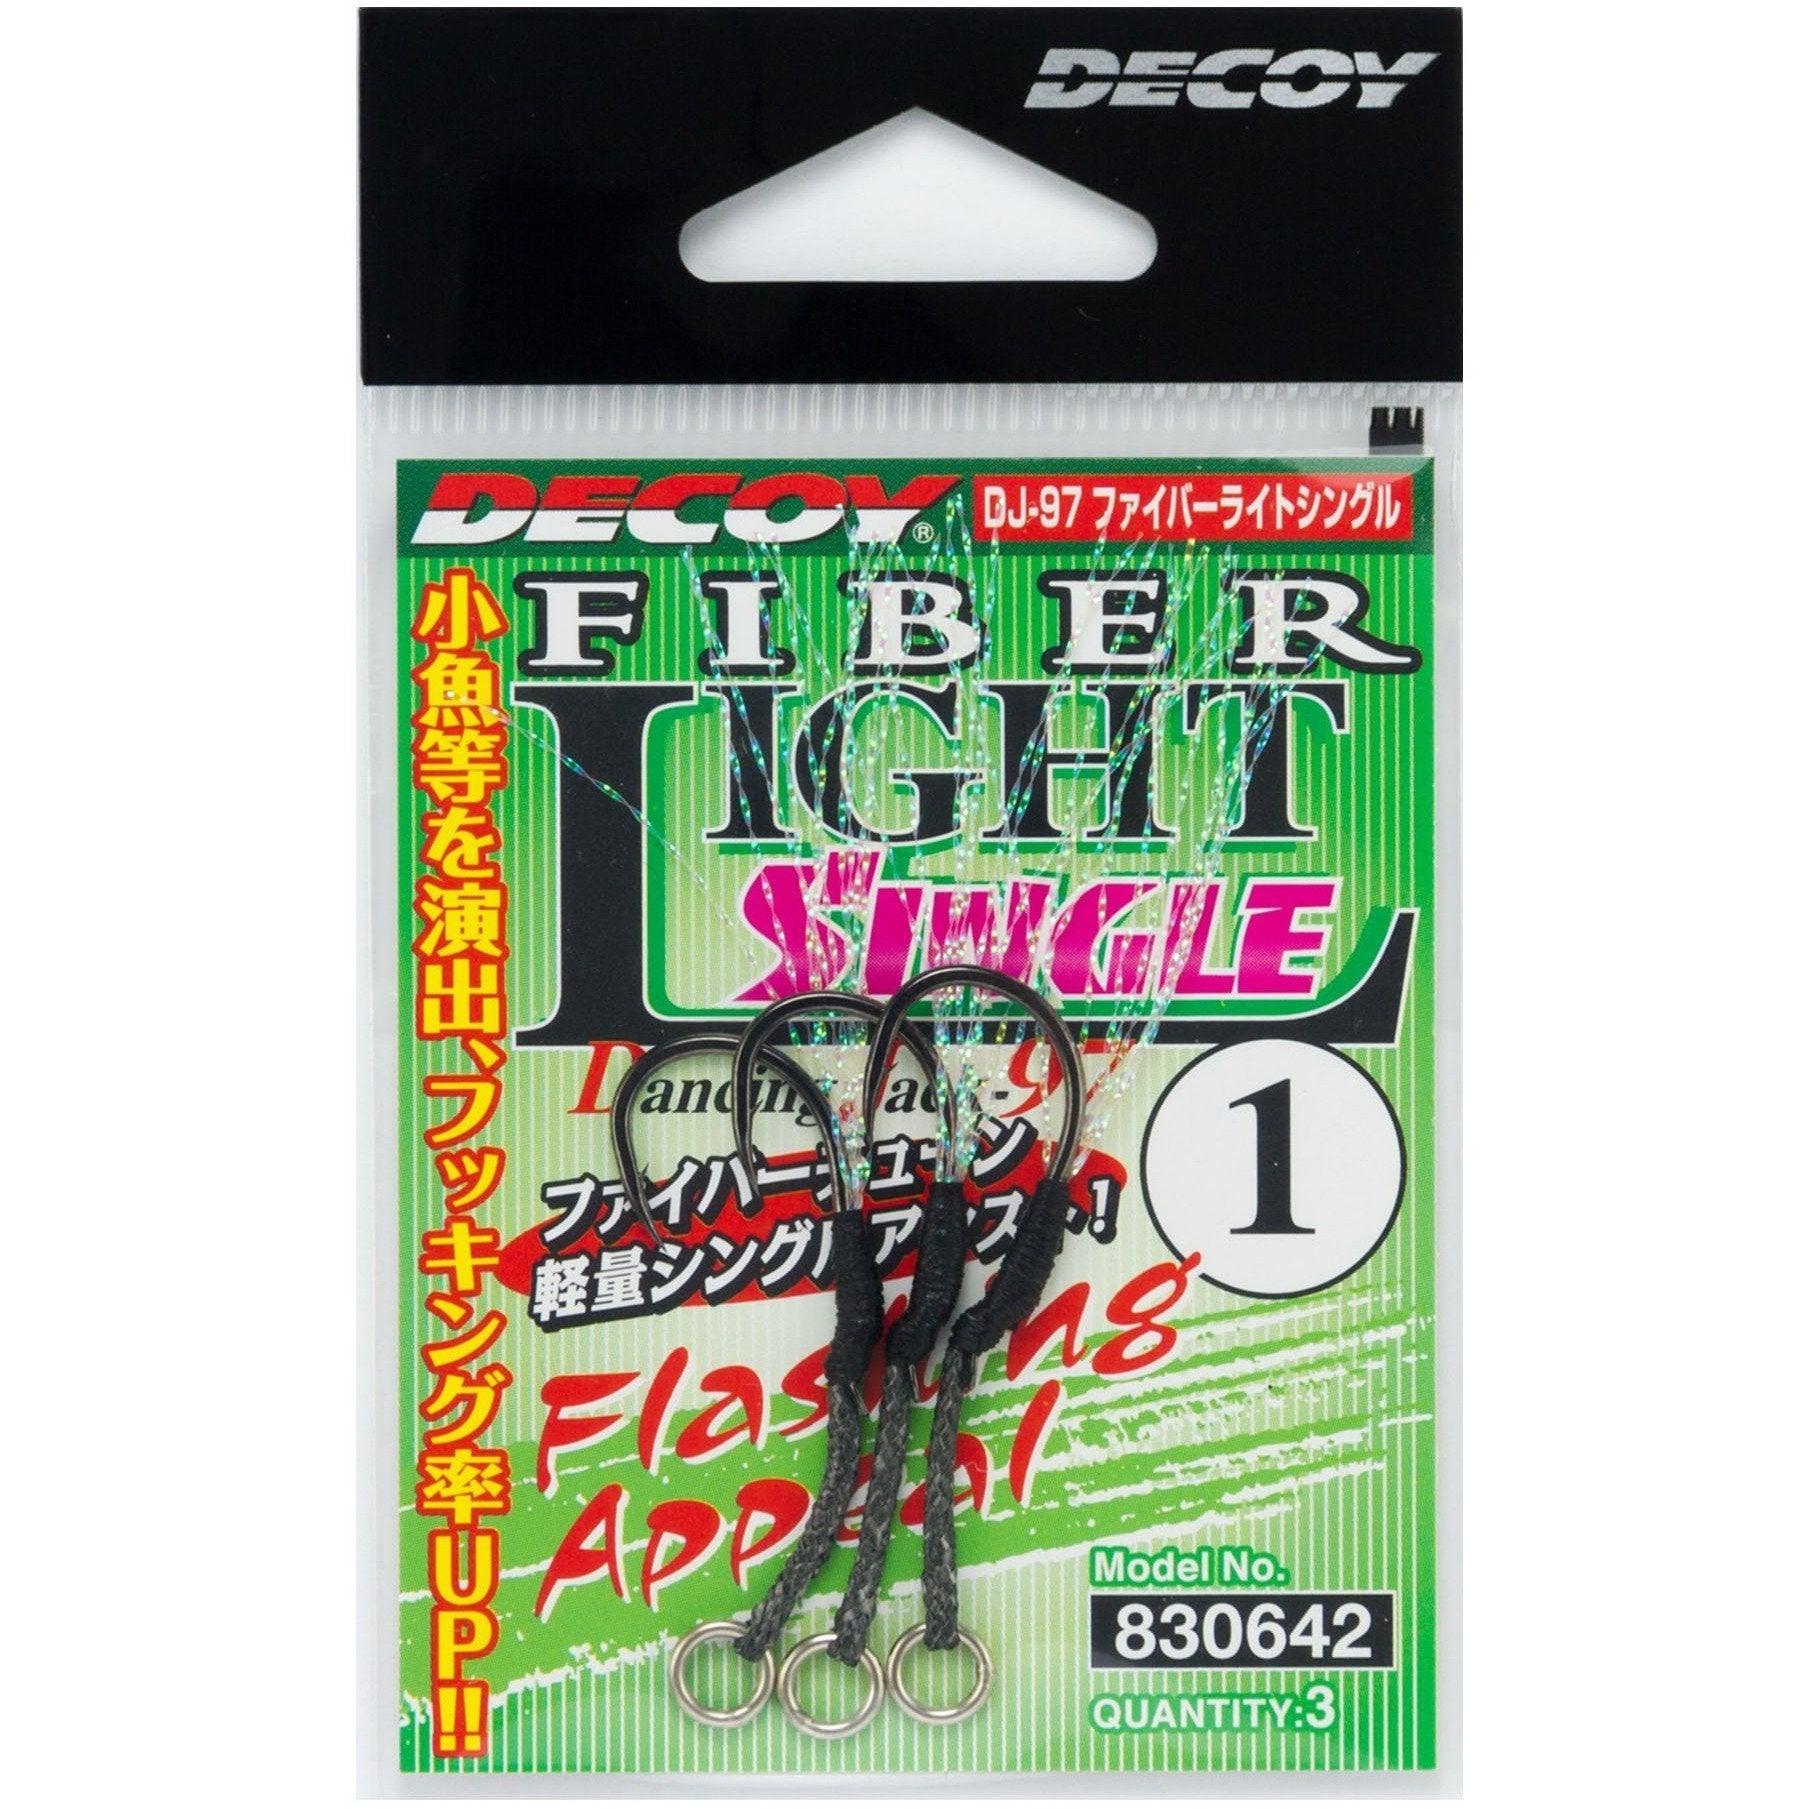 Assist Hook - Decoy - DJ-97 Fiber Light Single - The Fishermans Hut